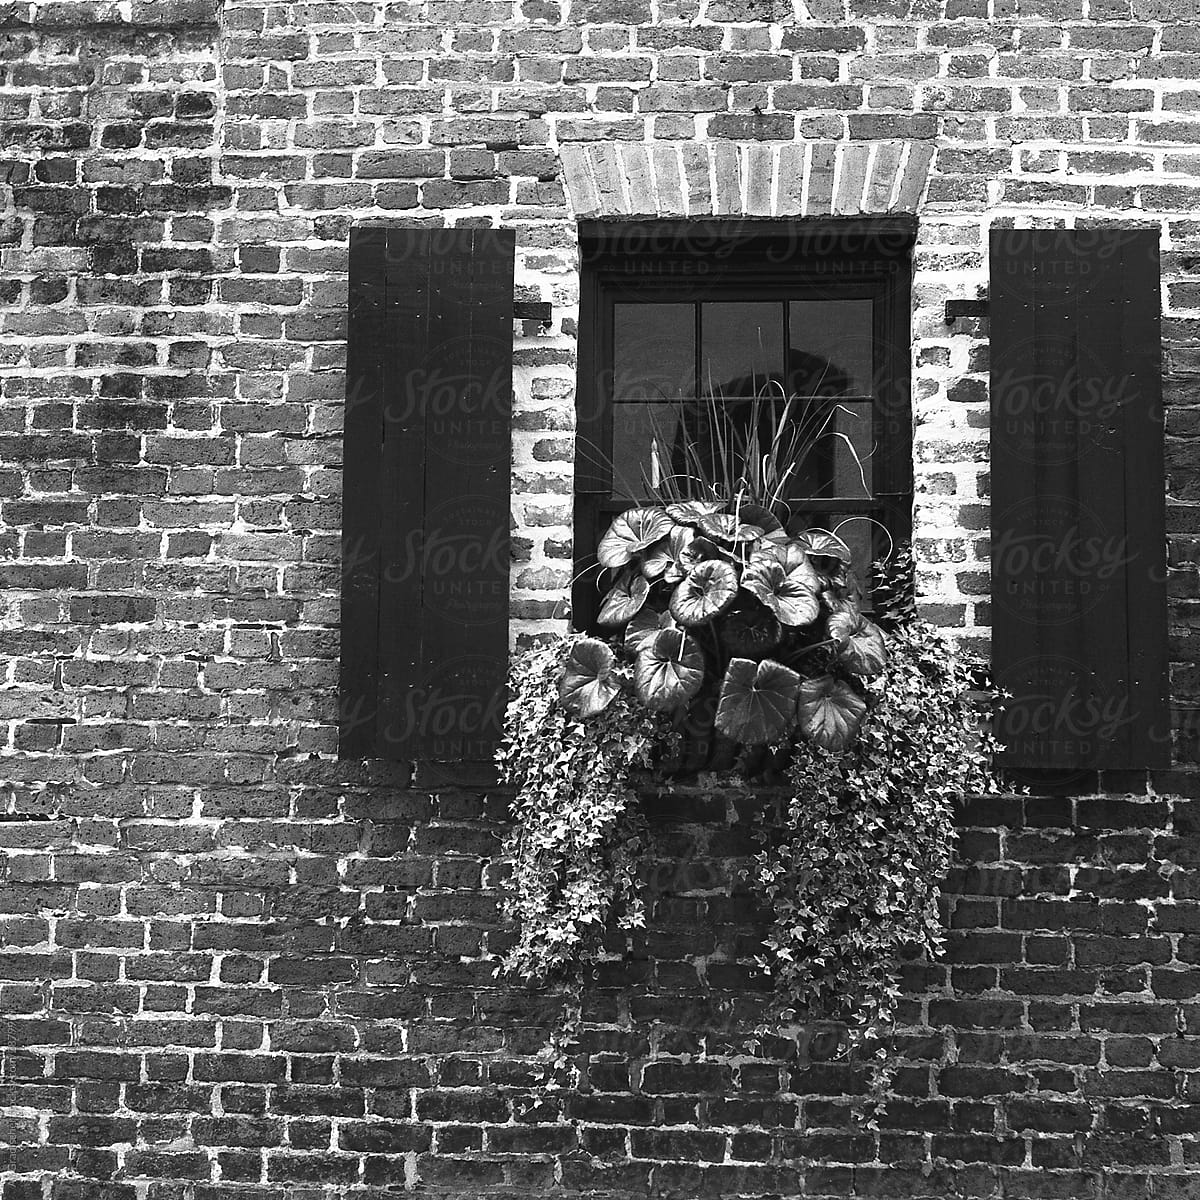 A Hanging Flower Basket Outside an Old Brick Building